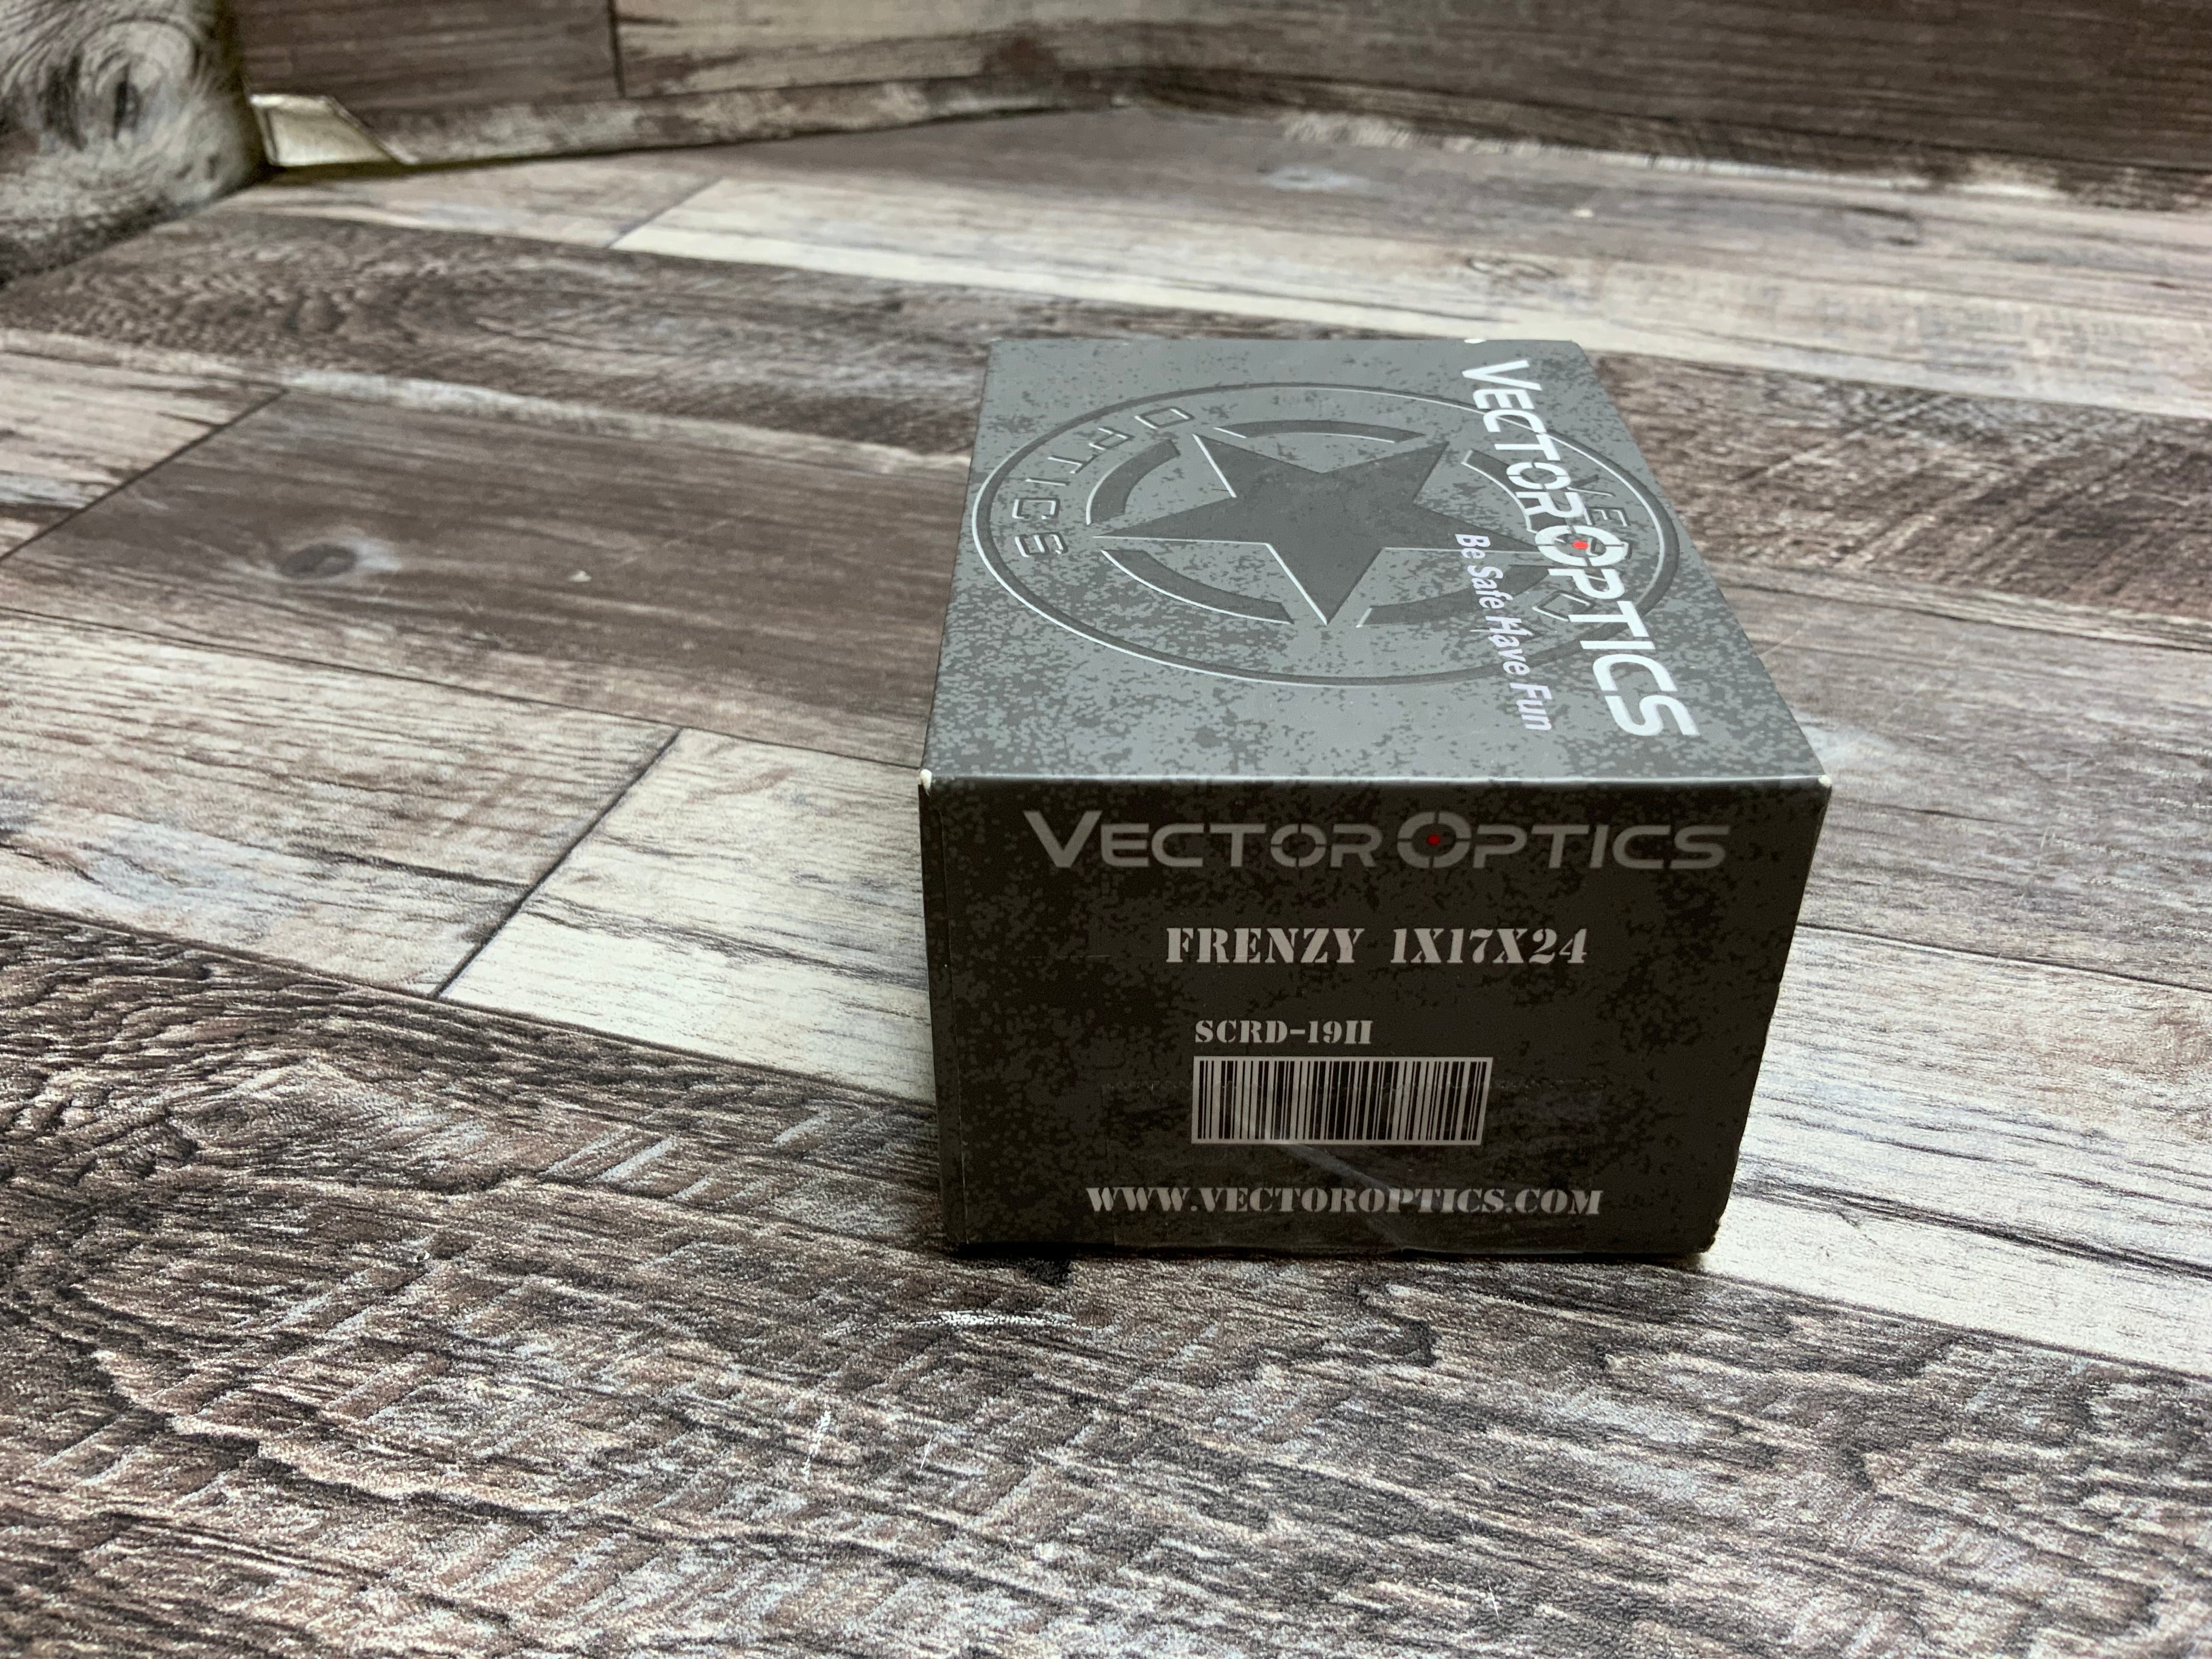 Vector Optics Frenzy 1x17x24mm Tactical Red Illuminated Dot Sight (8097241858286)